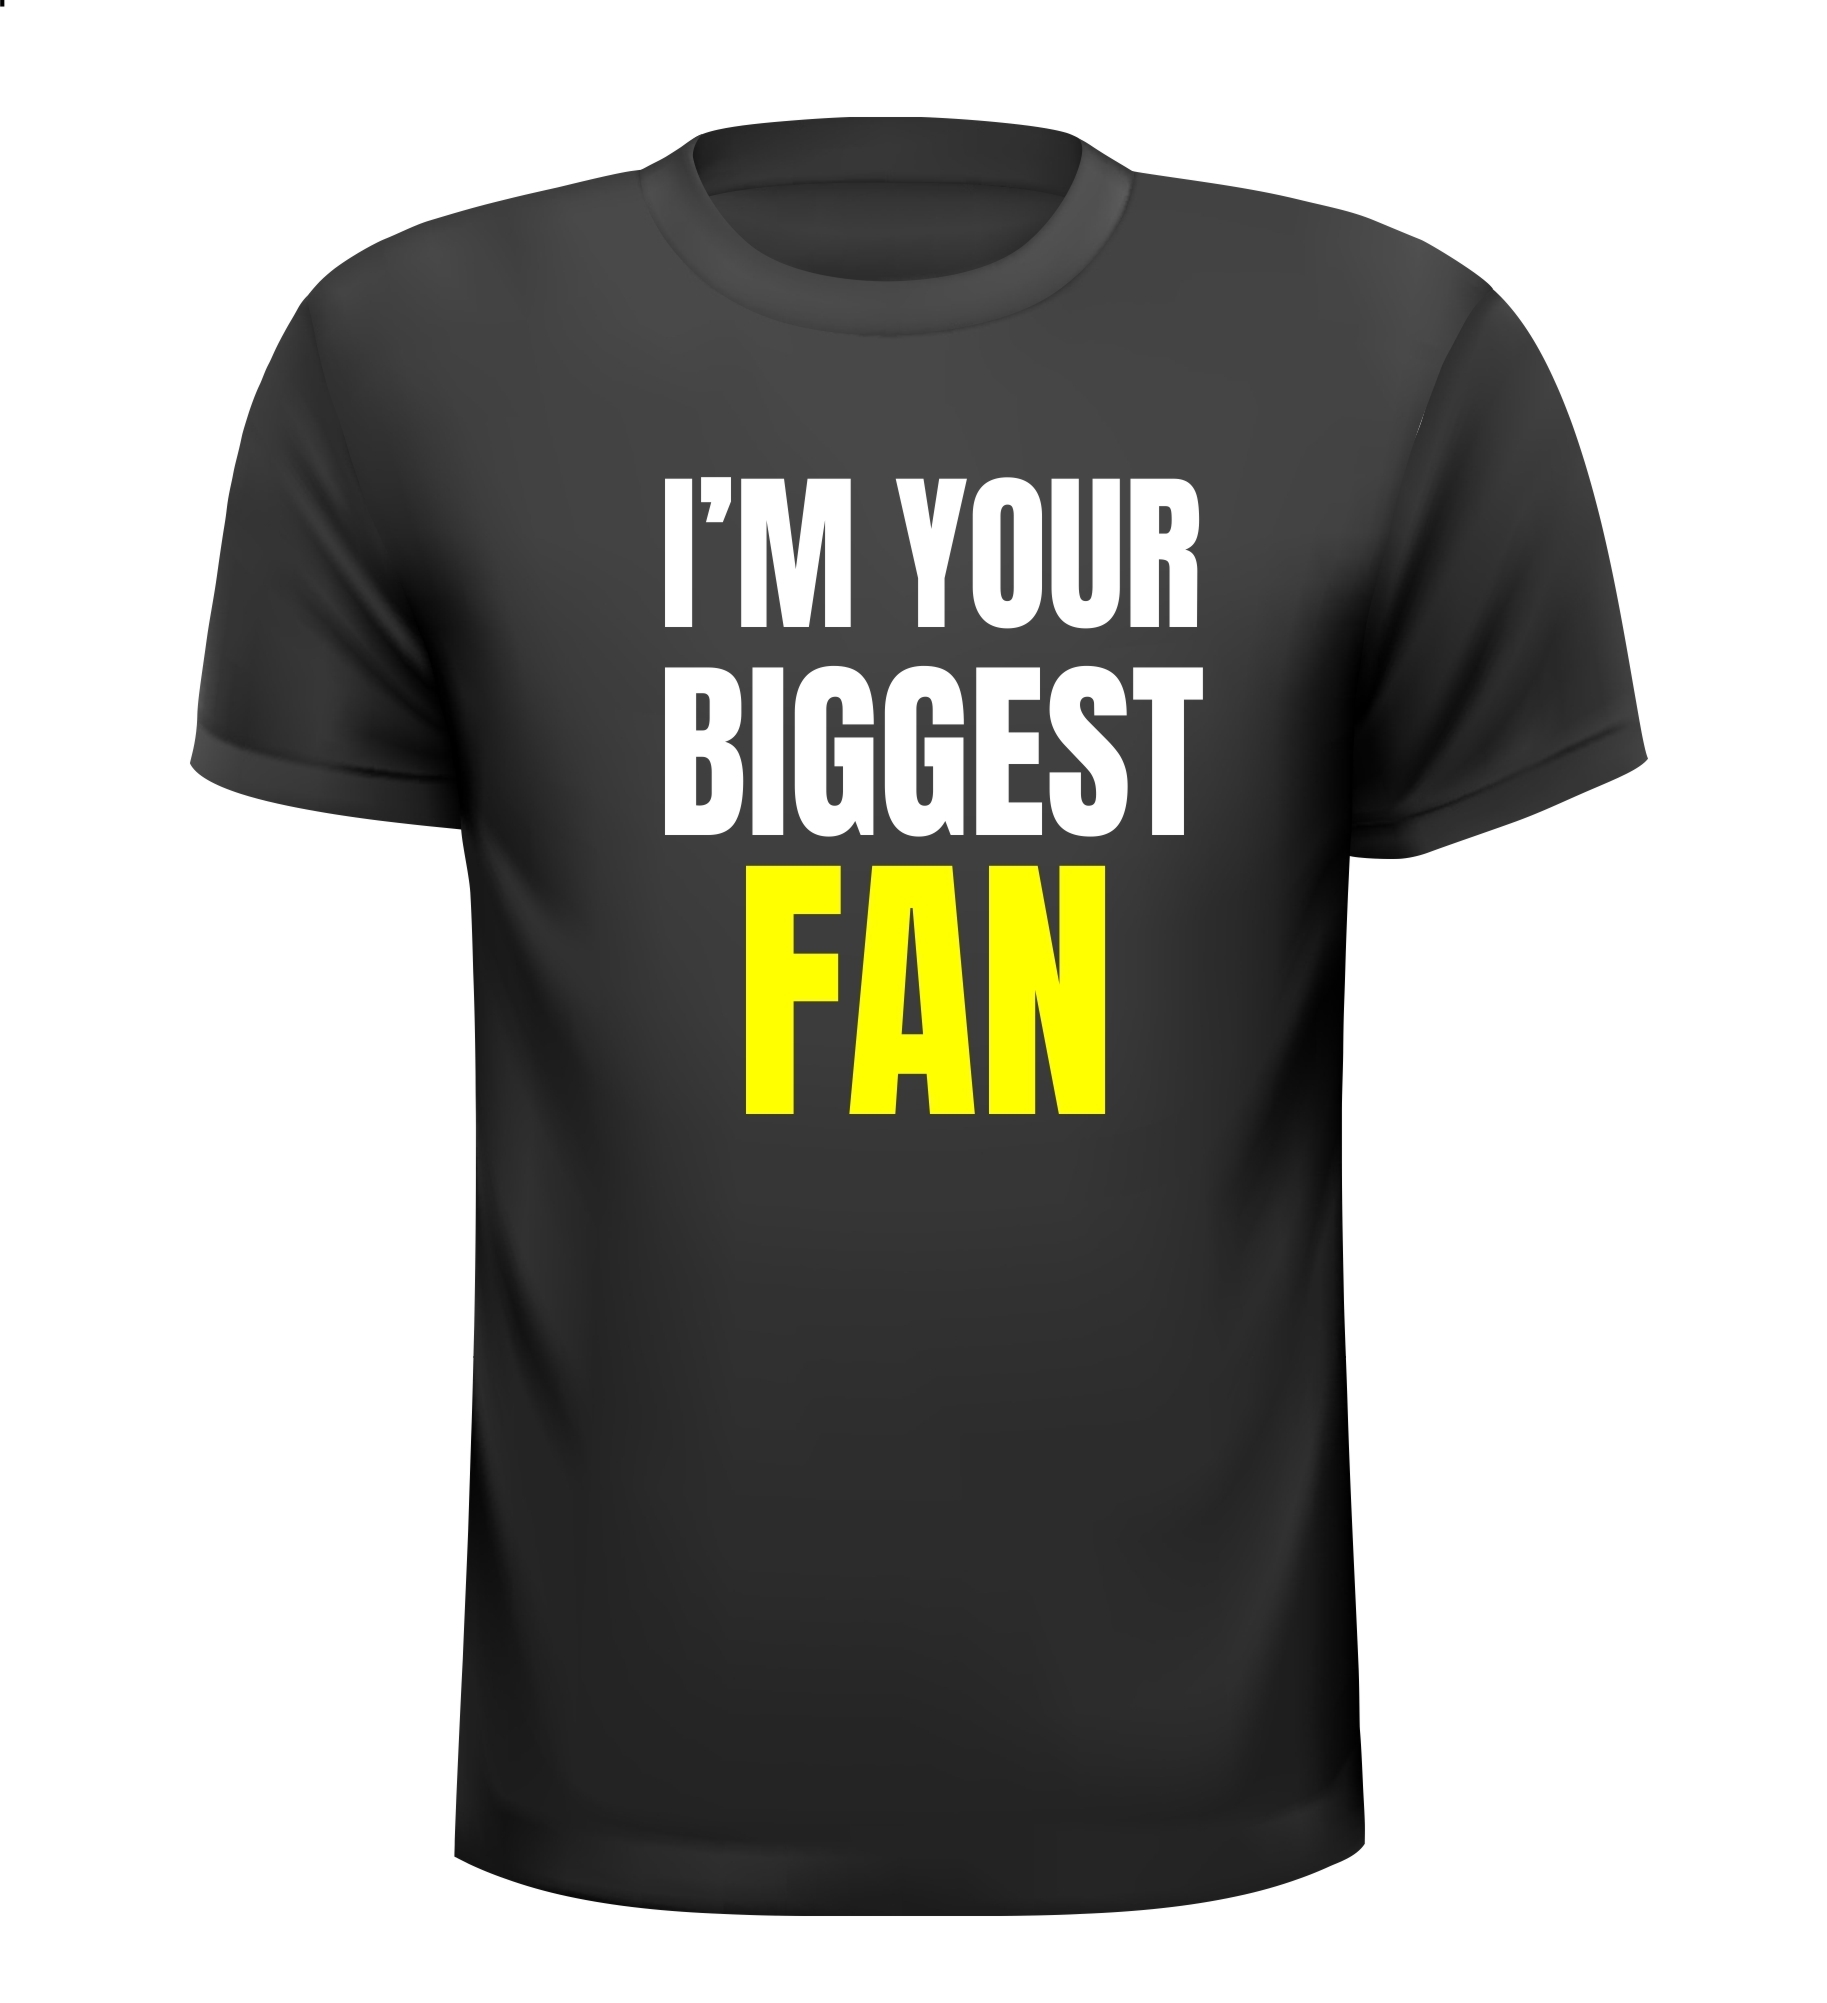 T-shirt i'm your biggest fan idool festival T-shirt